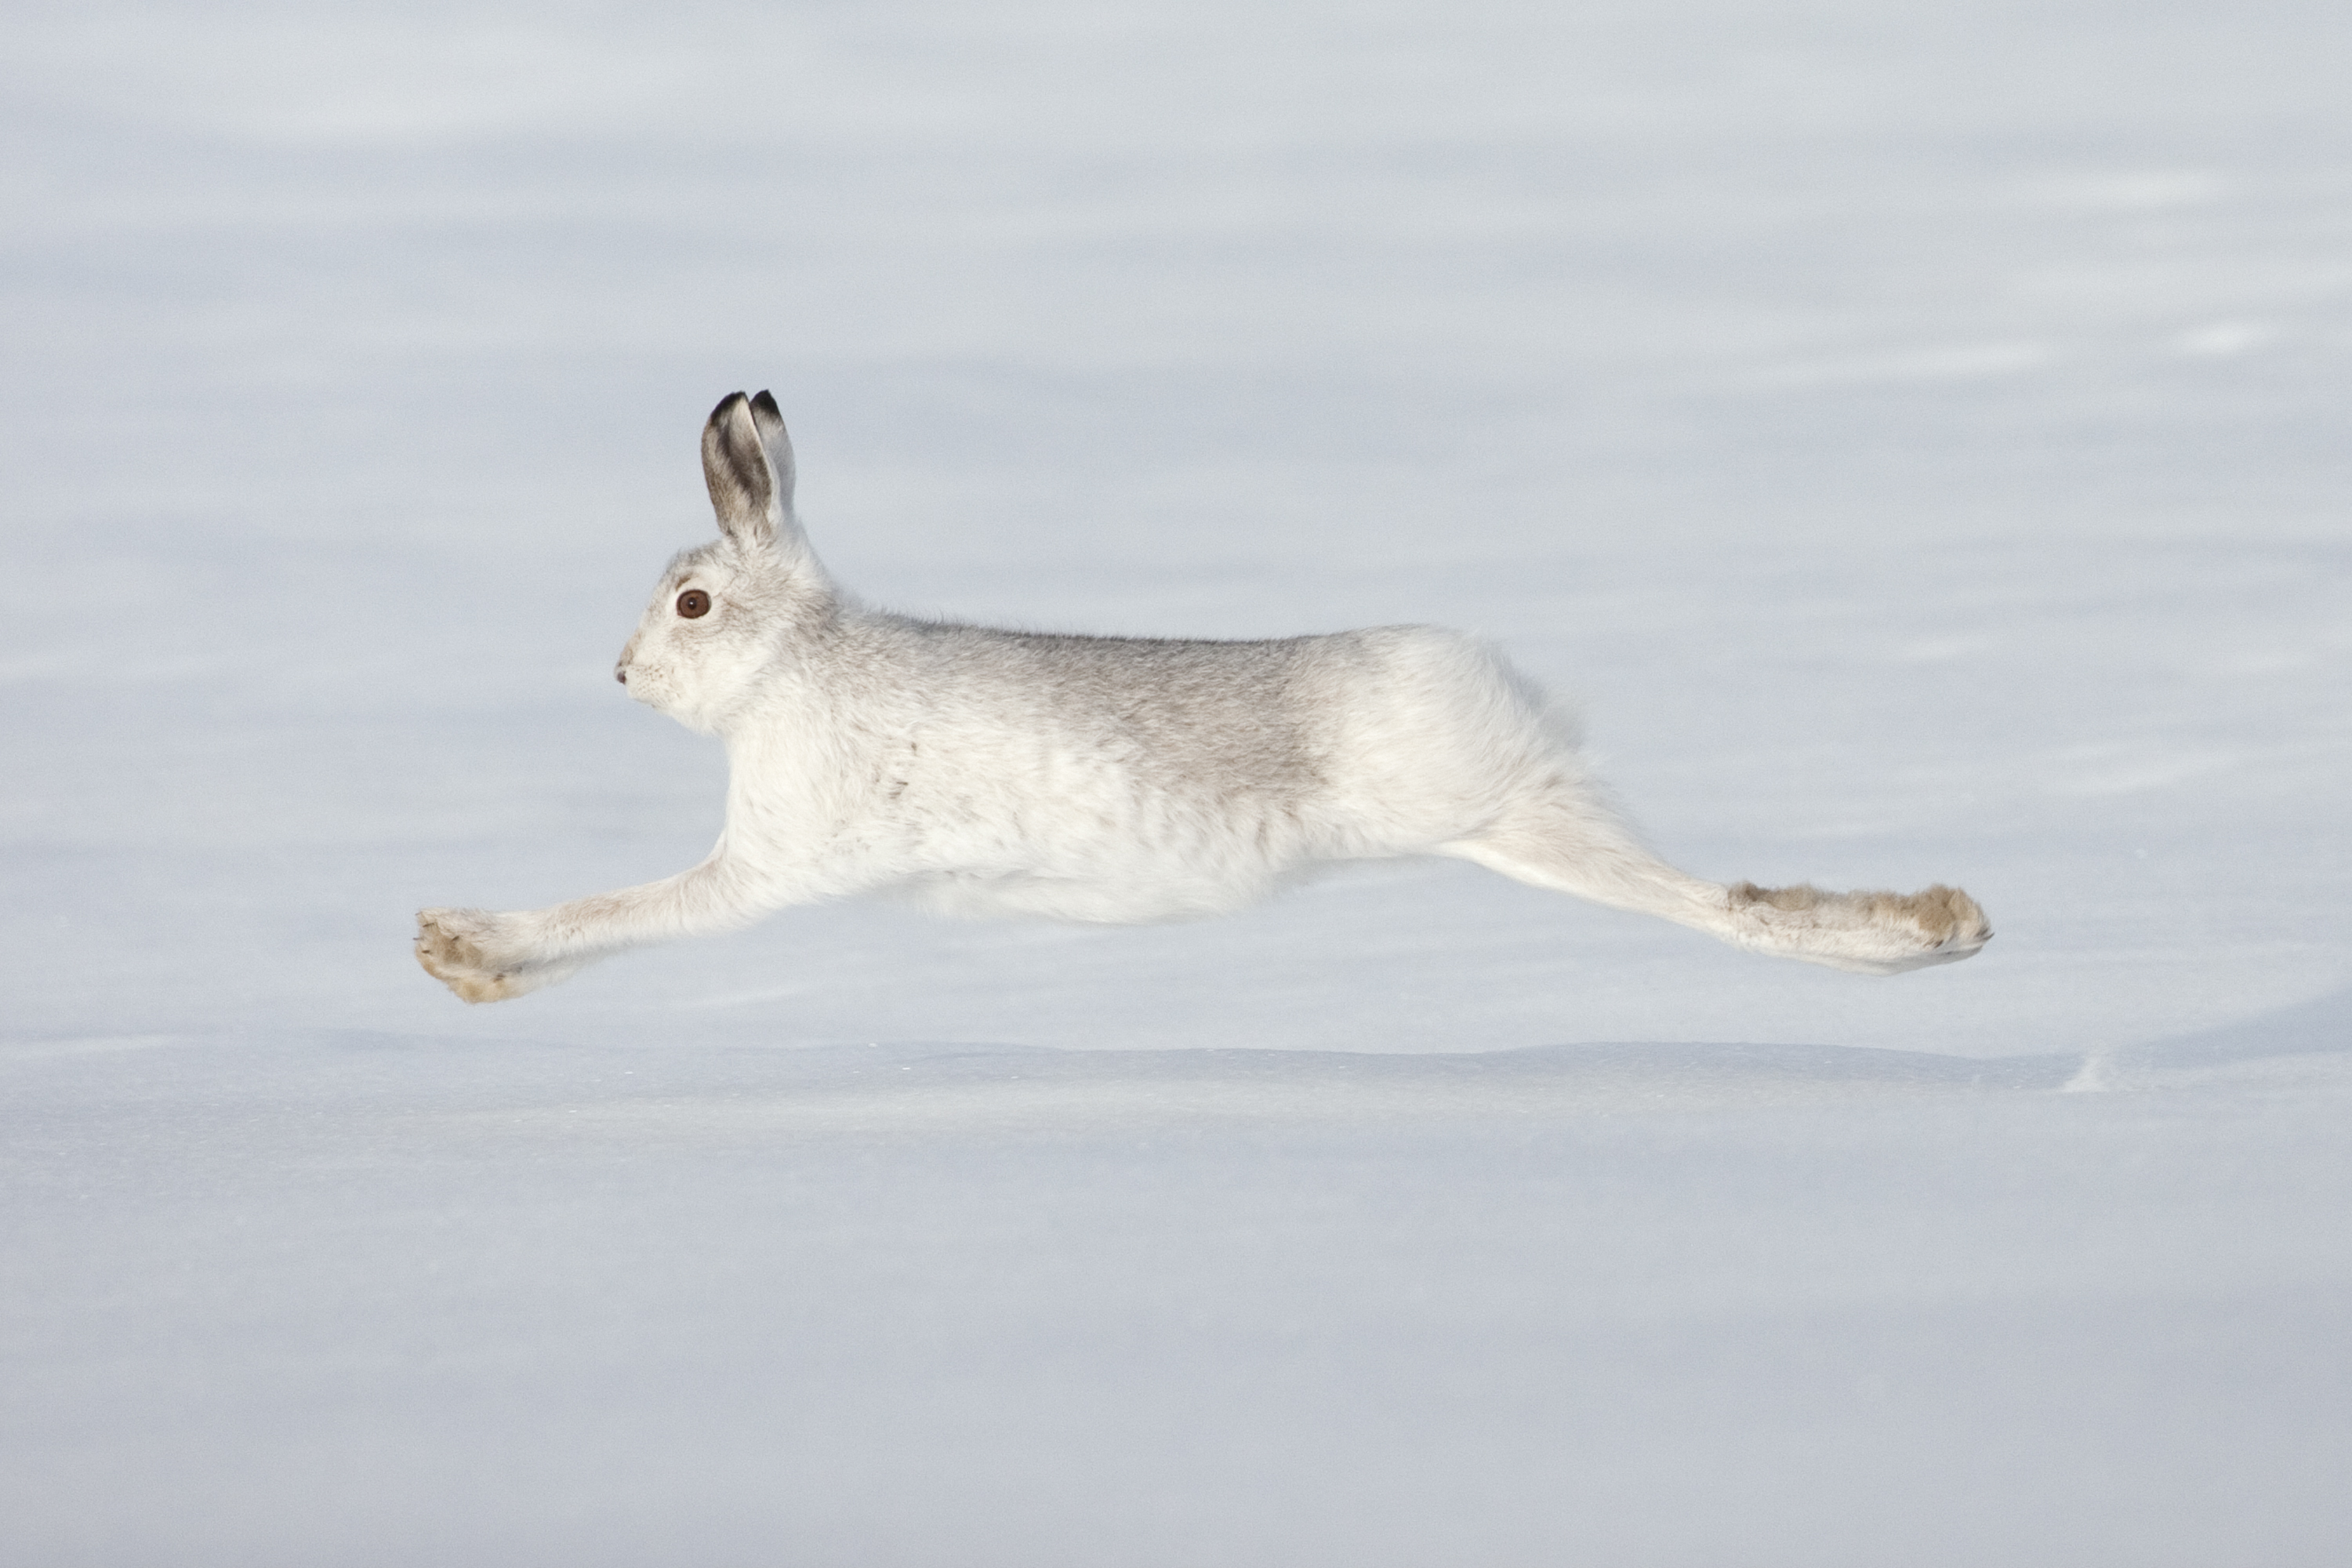 Mountain hare (Lepus timidus) in winter coat running across snow, Scotland